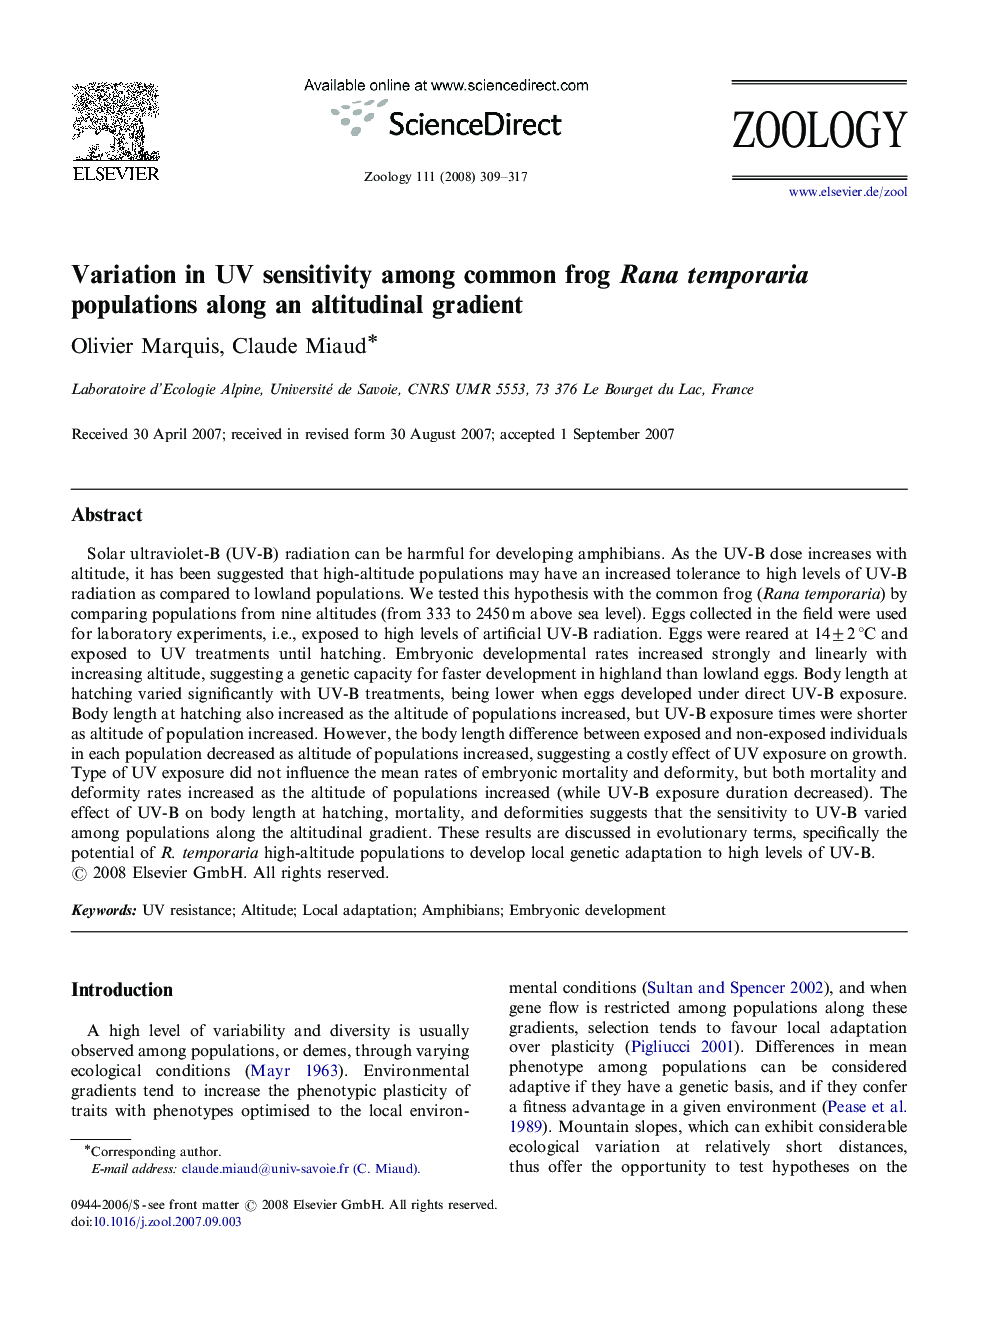 Variation in UV sensitivity among common frog Rana temporaria populations along an altitudinal gradient